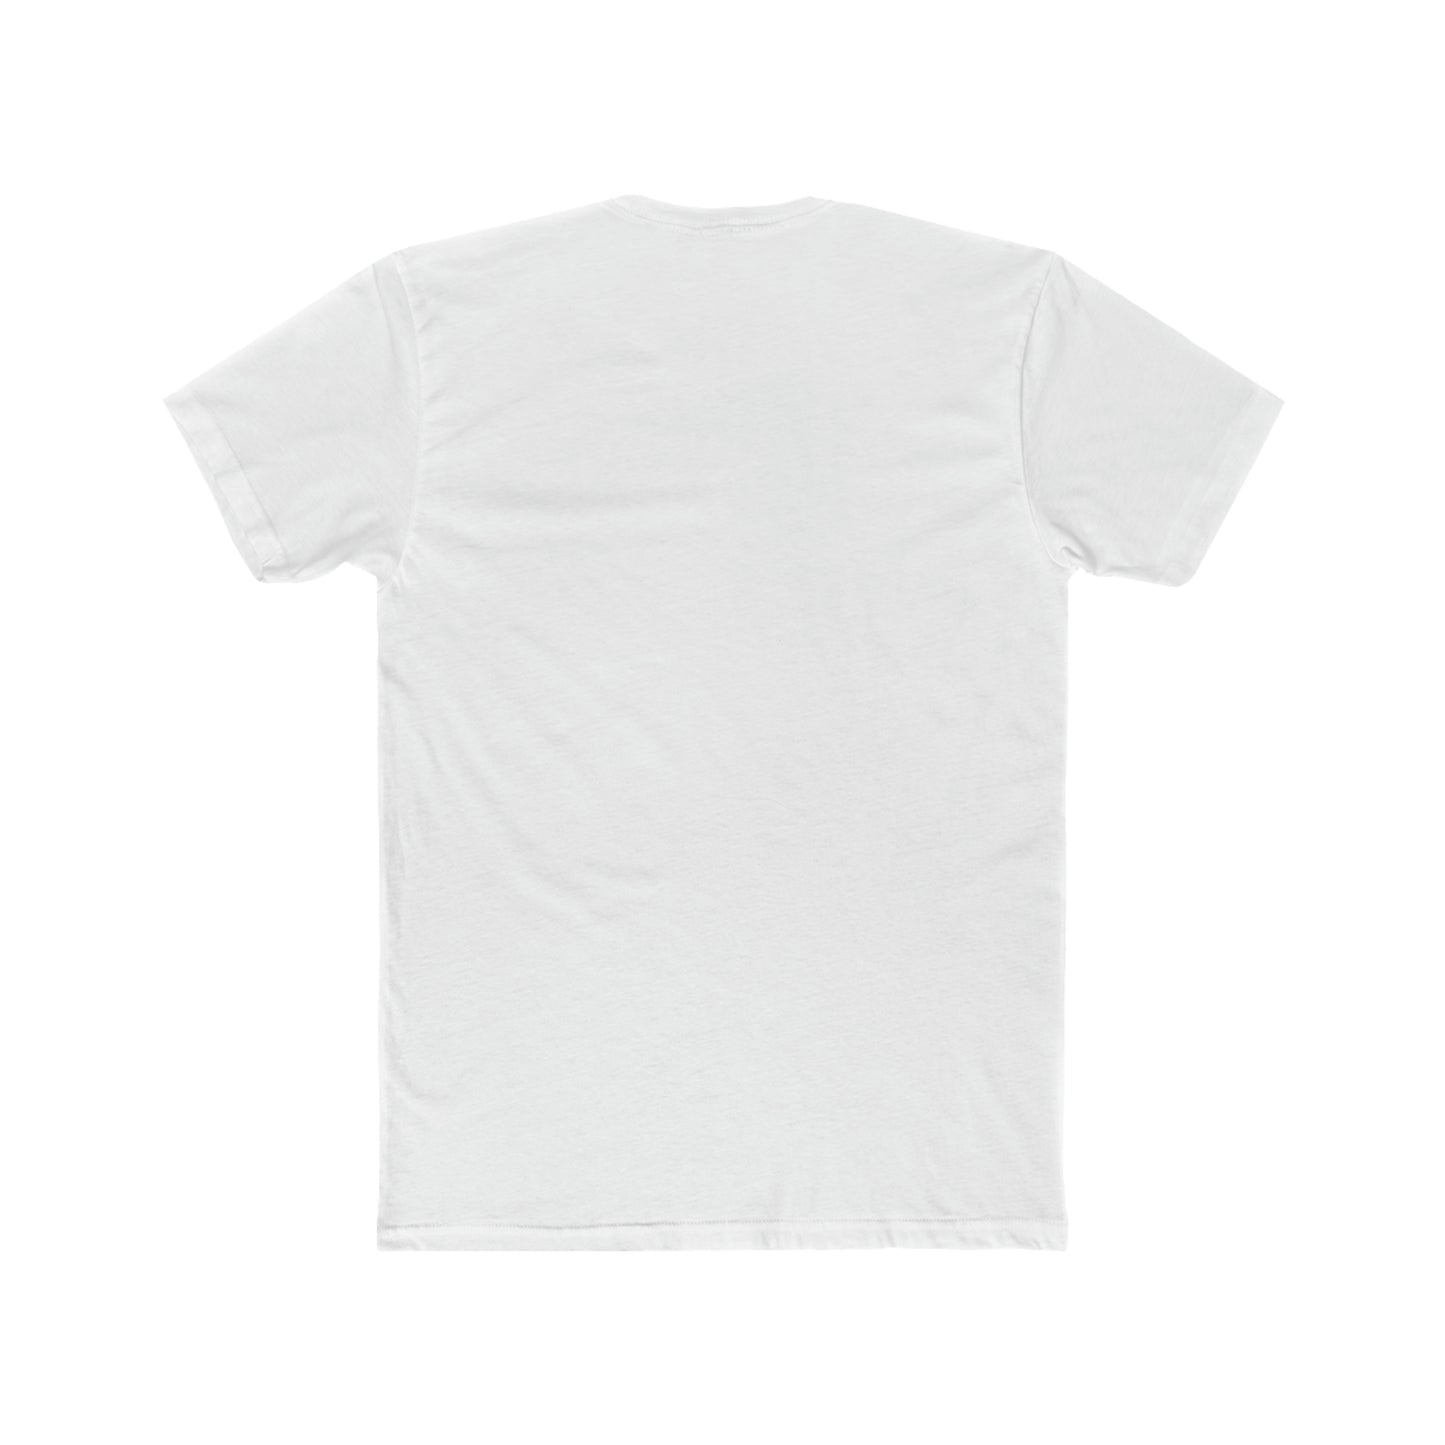 Donald Trump Mugshot T-Shirt